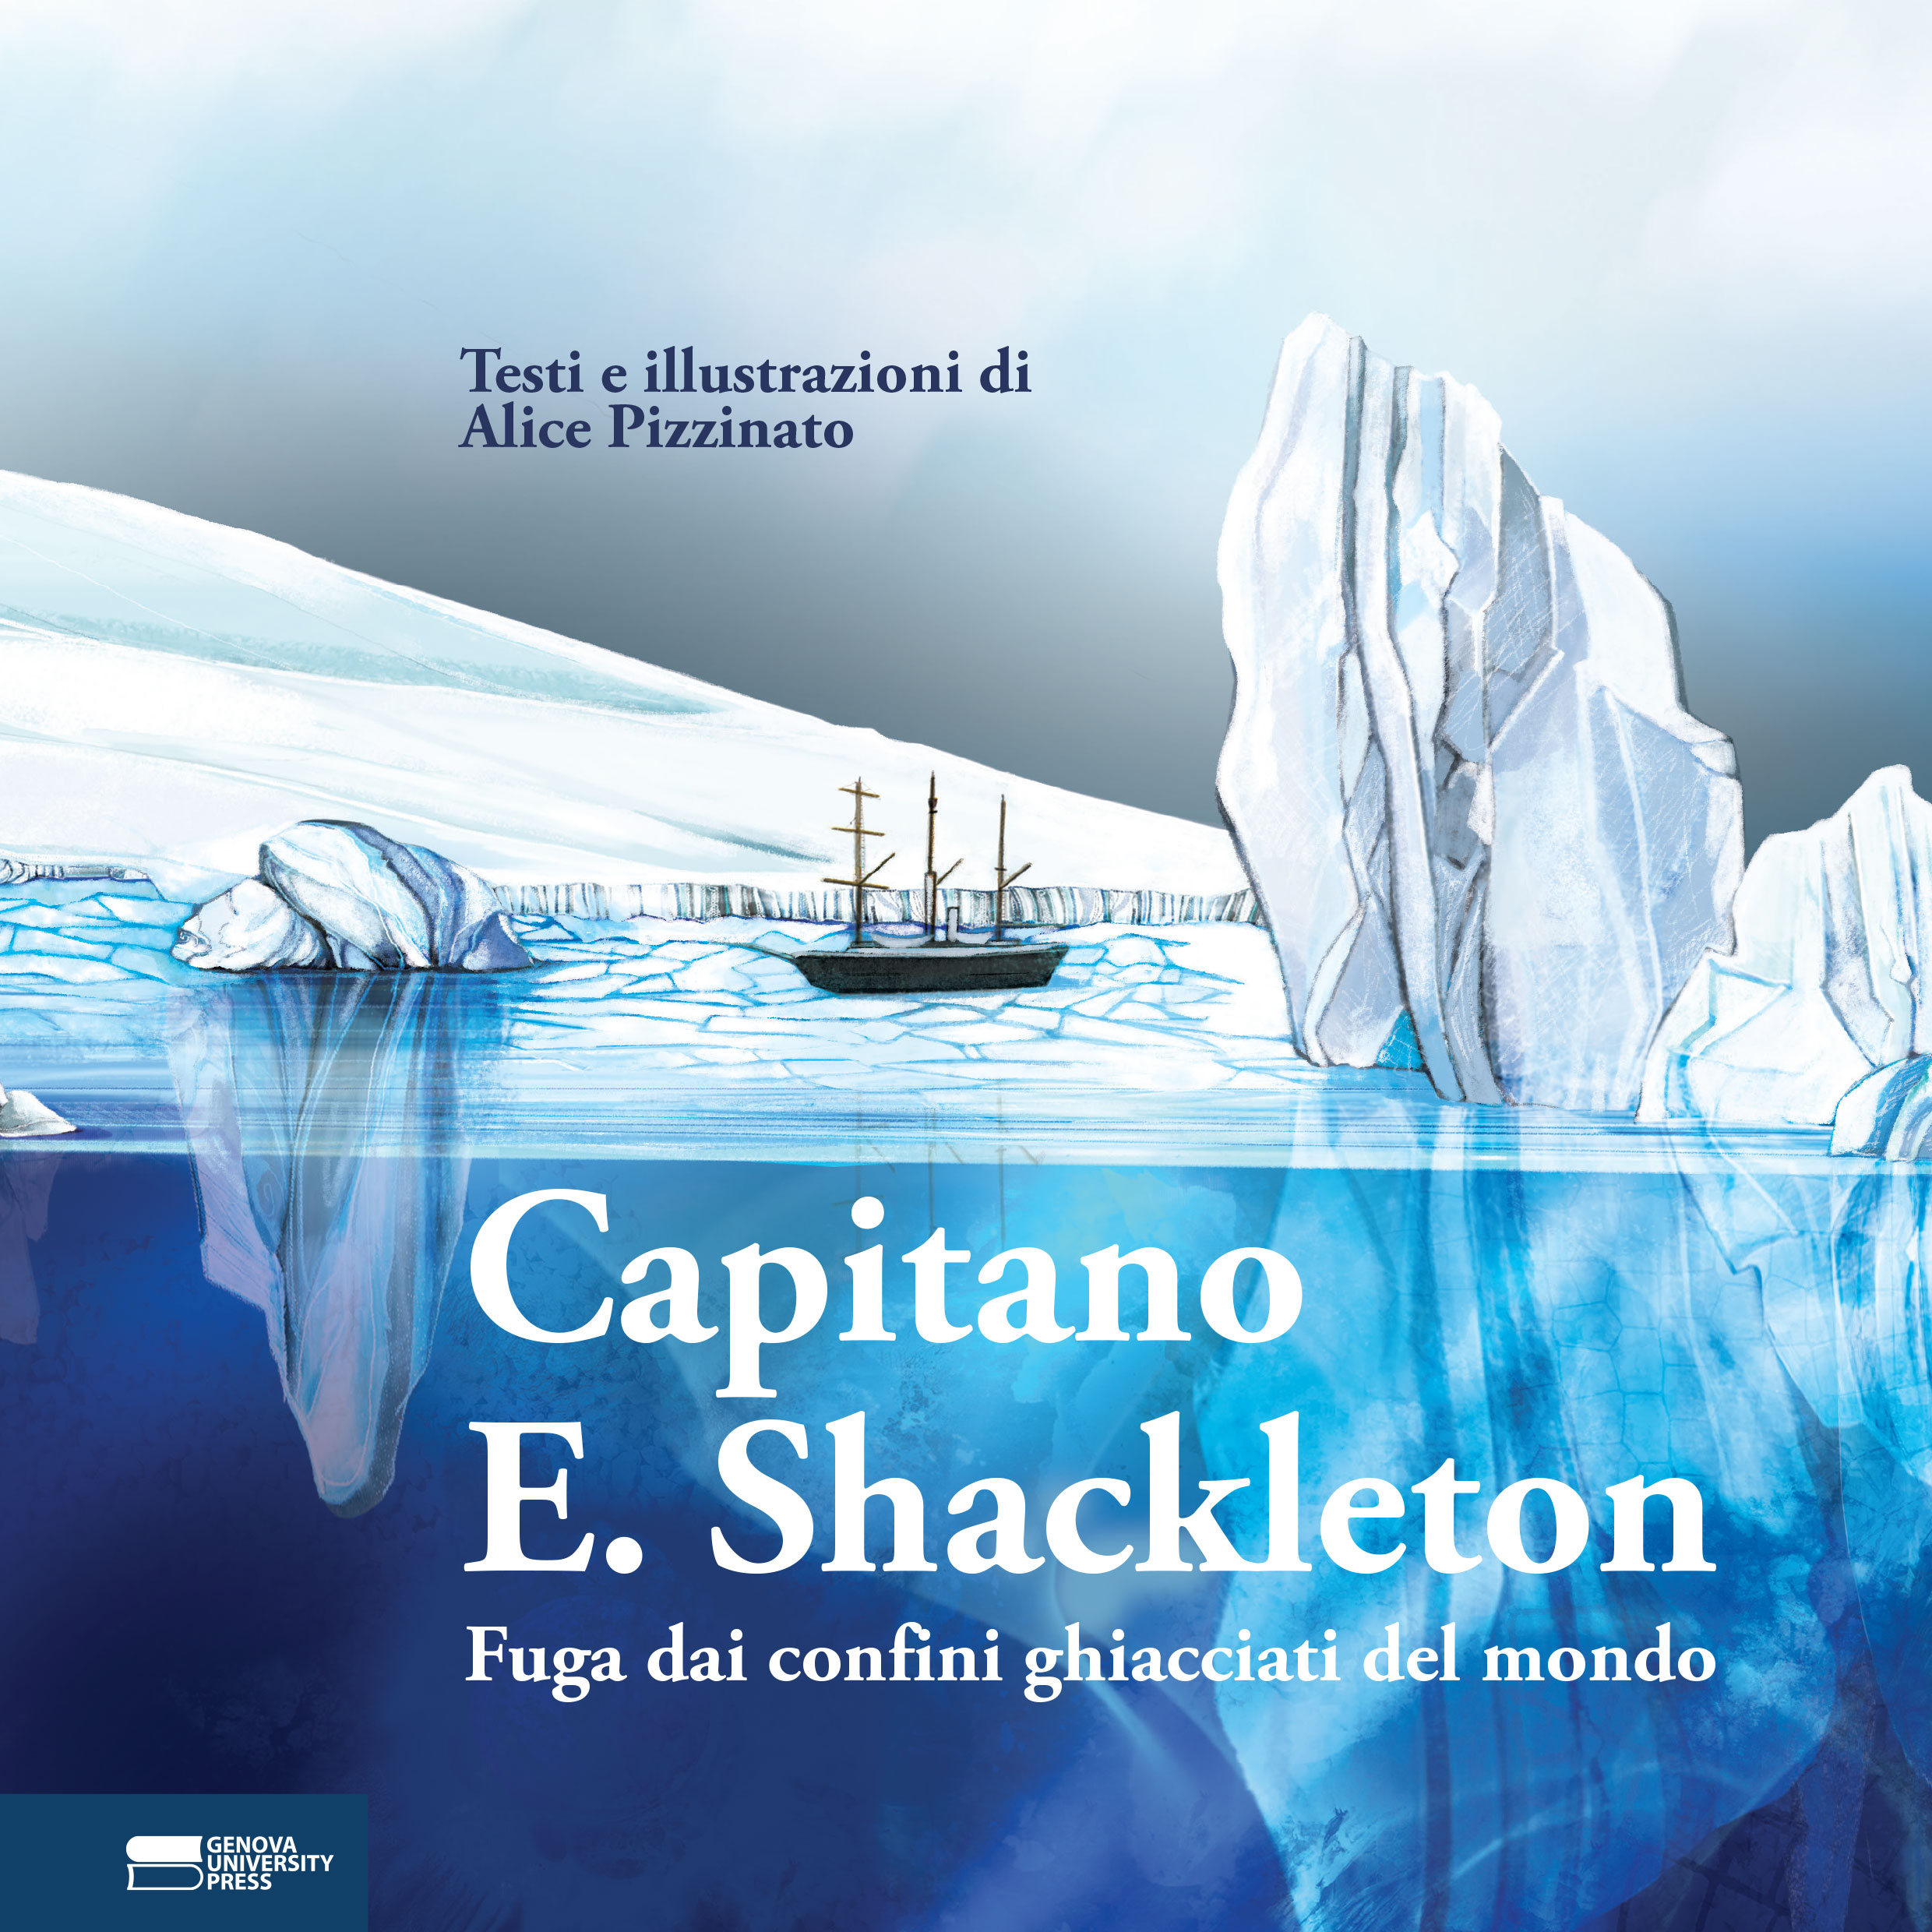 Capitano E. Shackleton